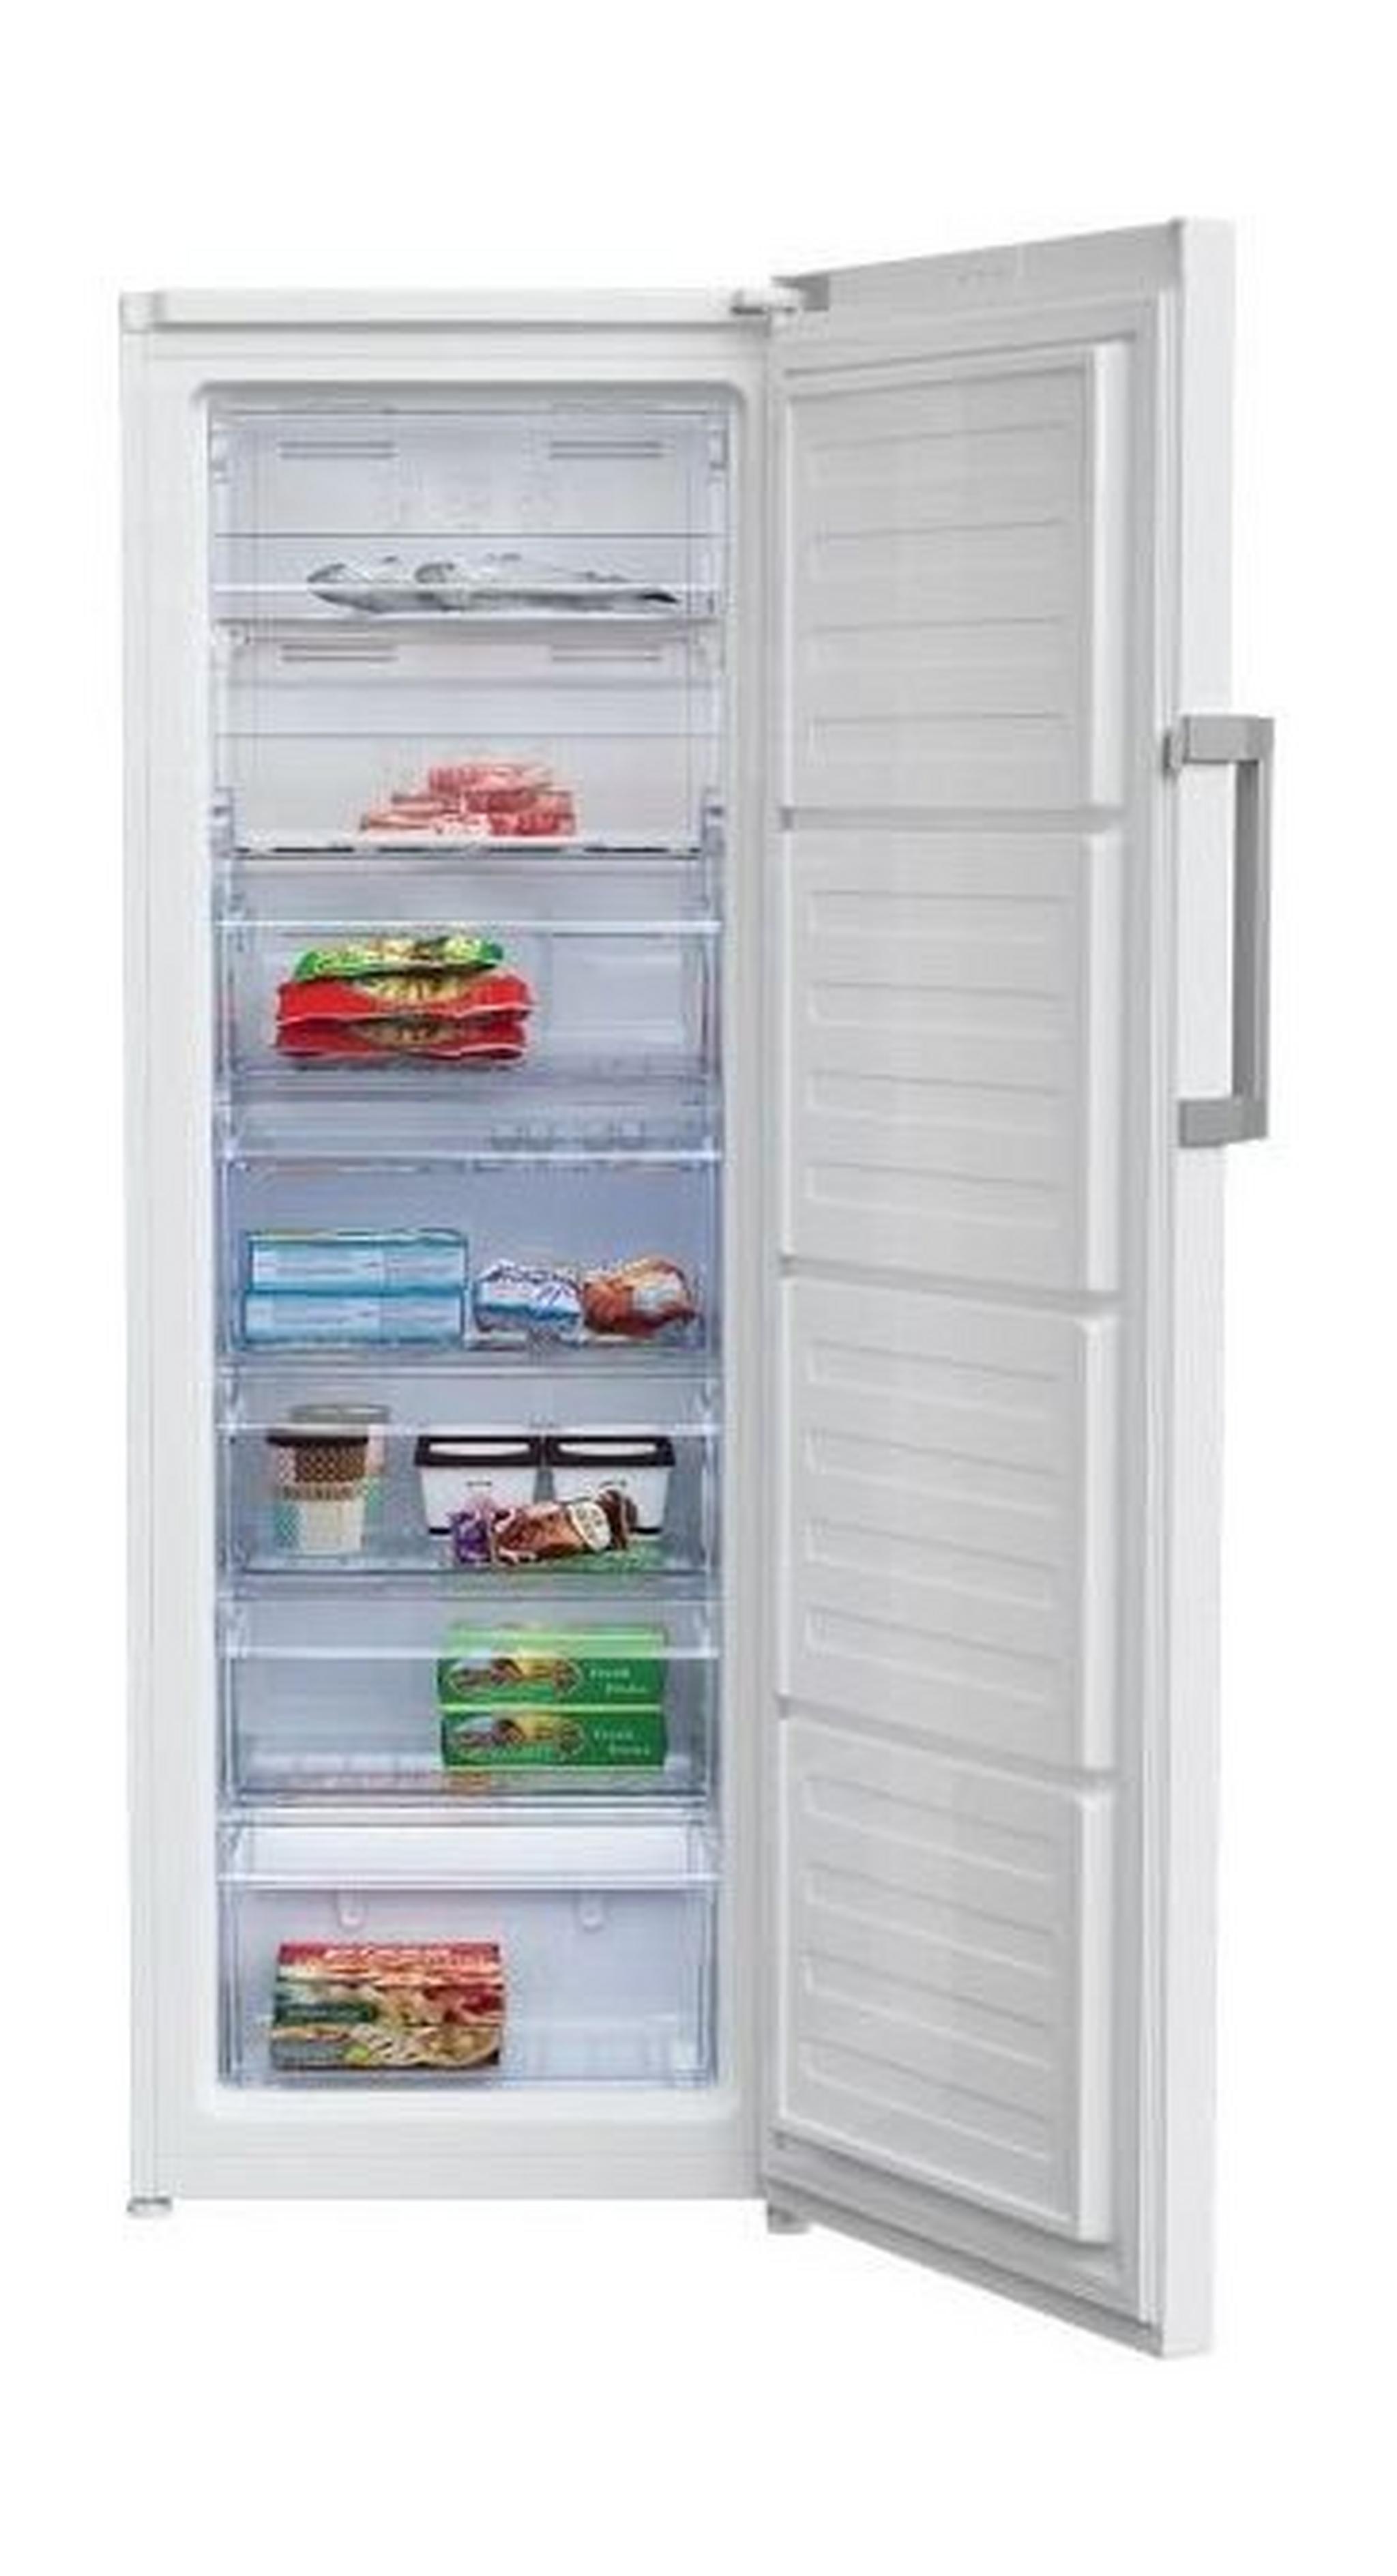 Beko Upright Freezer, 11CFT, 290-Liters, RFNE320L24W - White